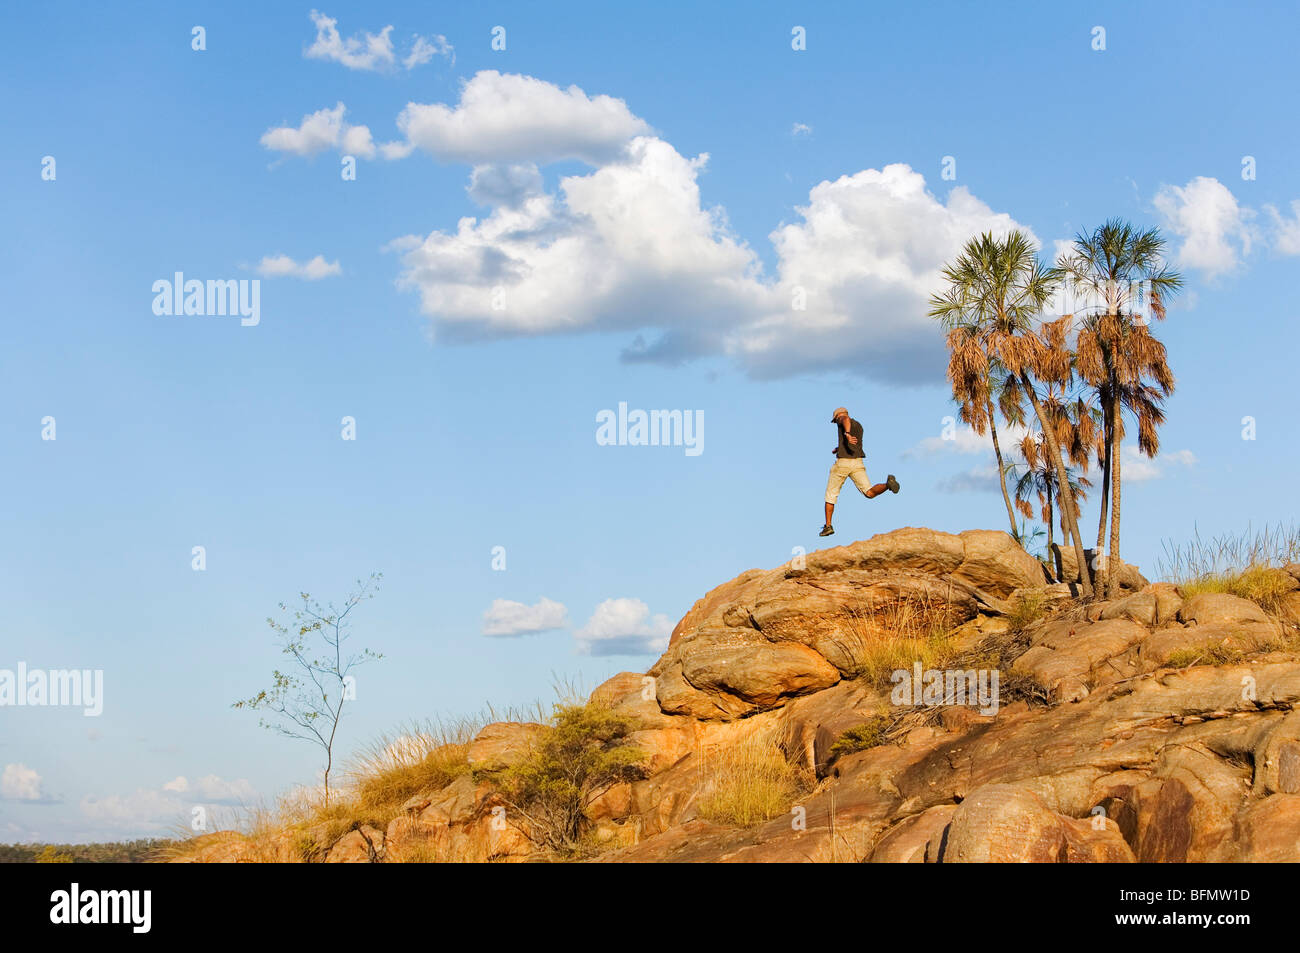 Australia, Northern Territory, Katherine.  A hiker leaps across rocks in Nitmiluk (Katherine Gorge) National Park.  (MR) Stock Photo